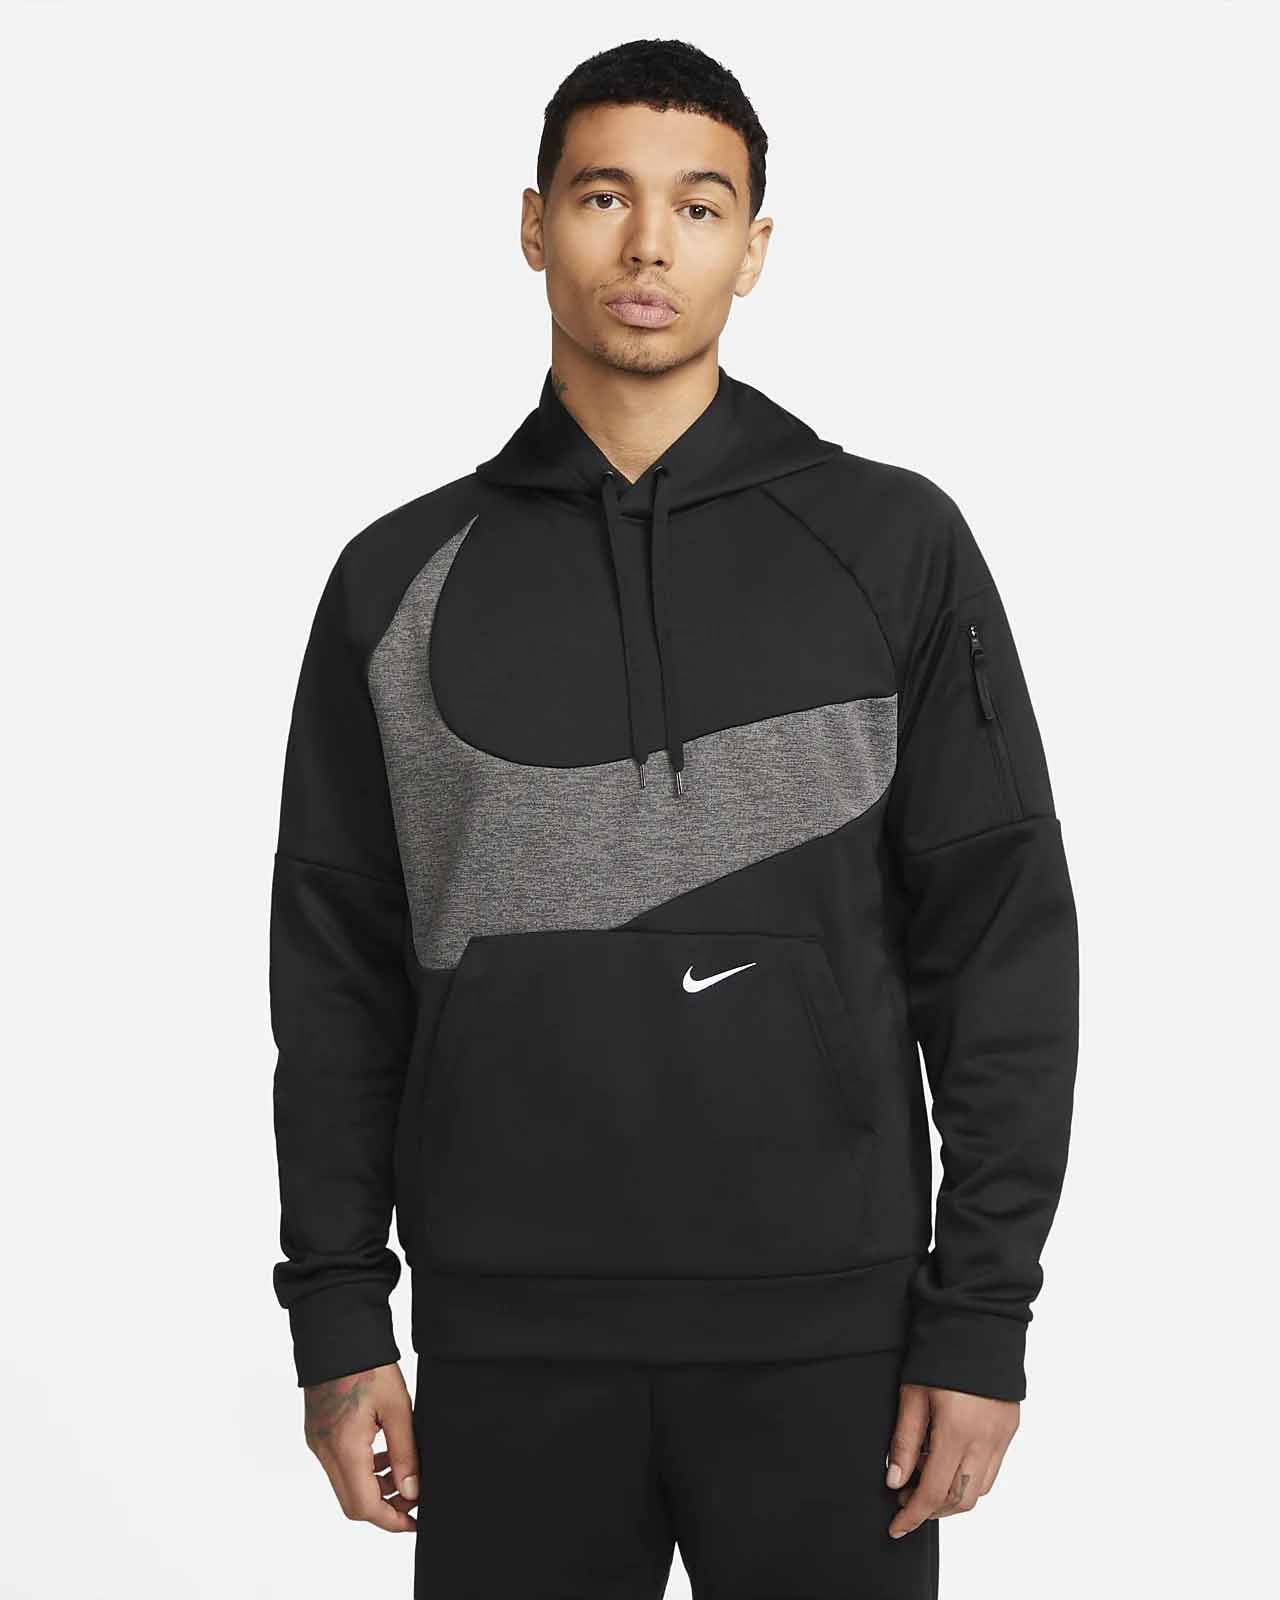 Nike Therma-Fit sweatshirt